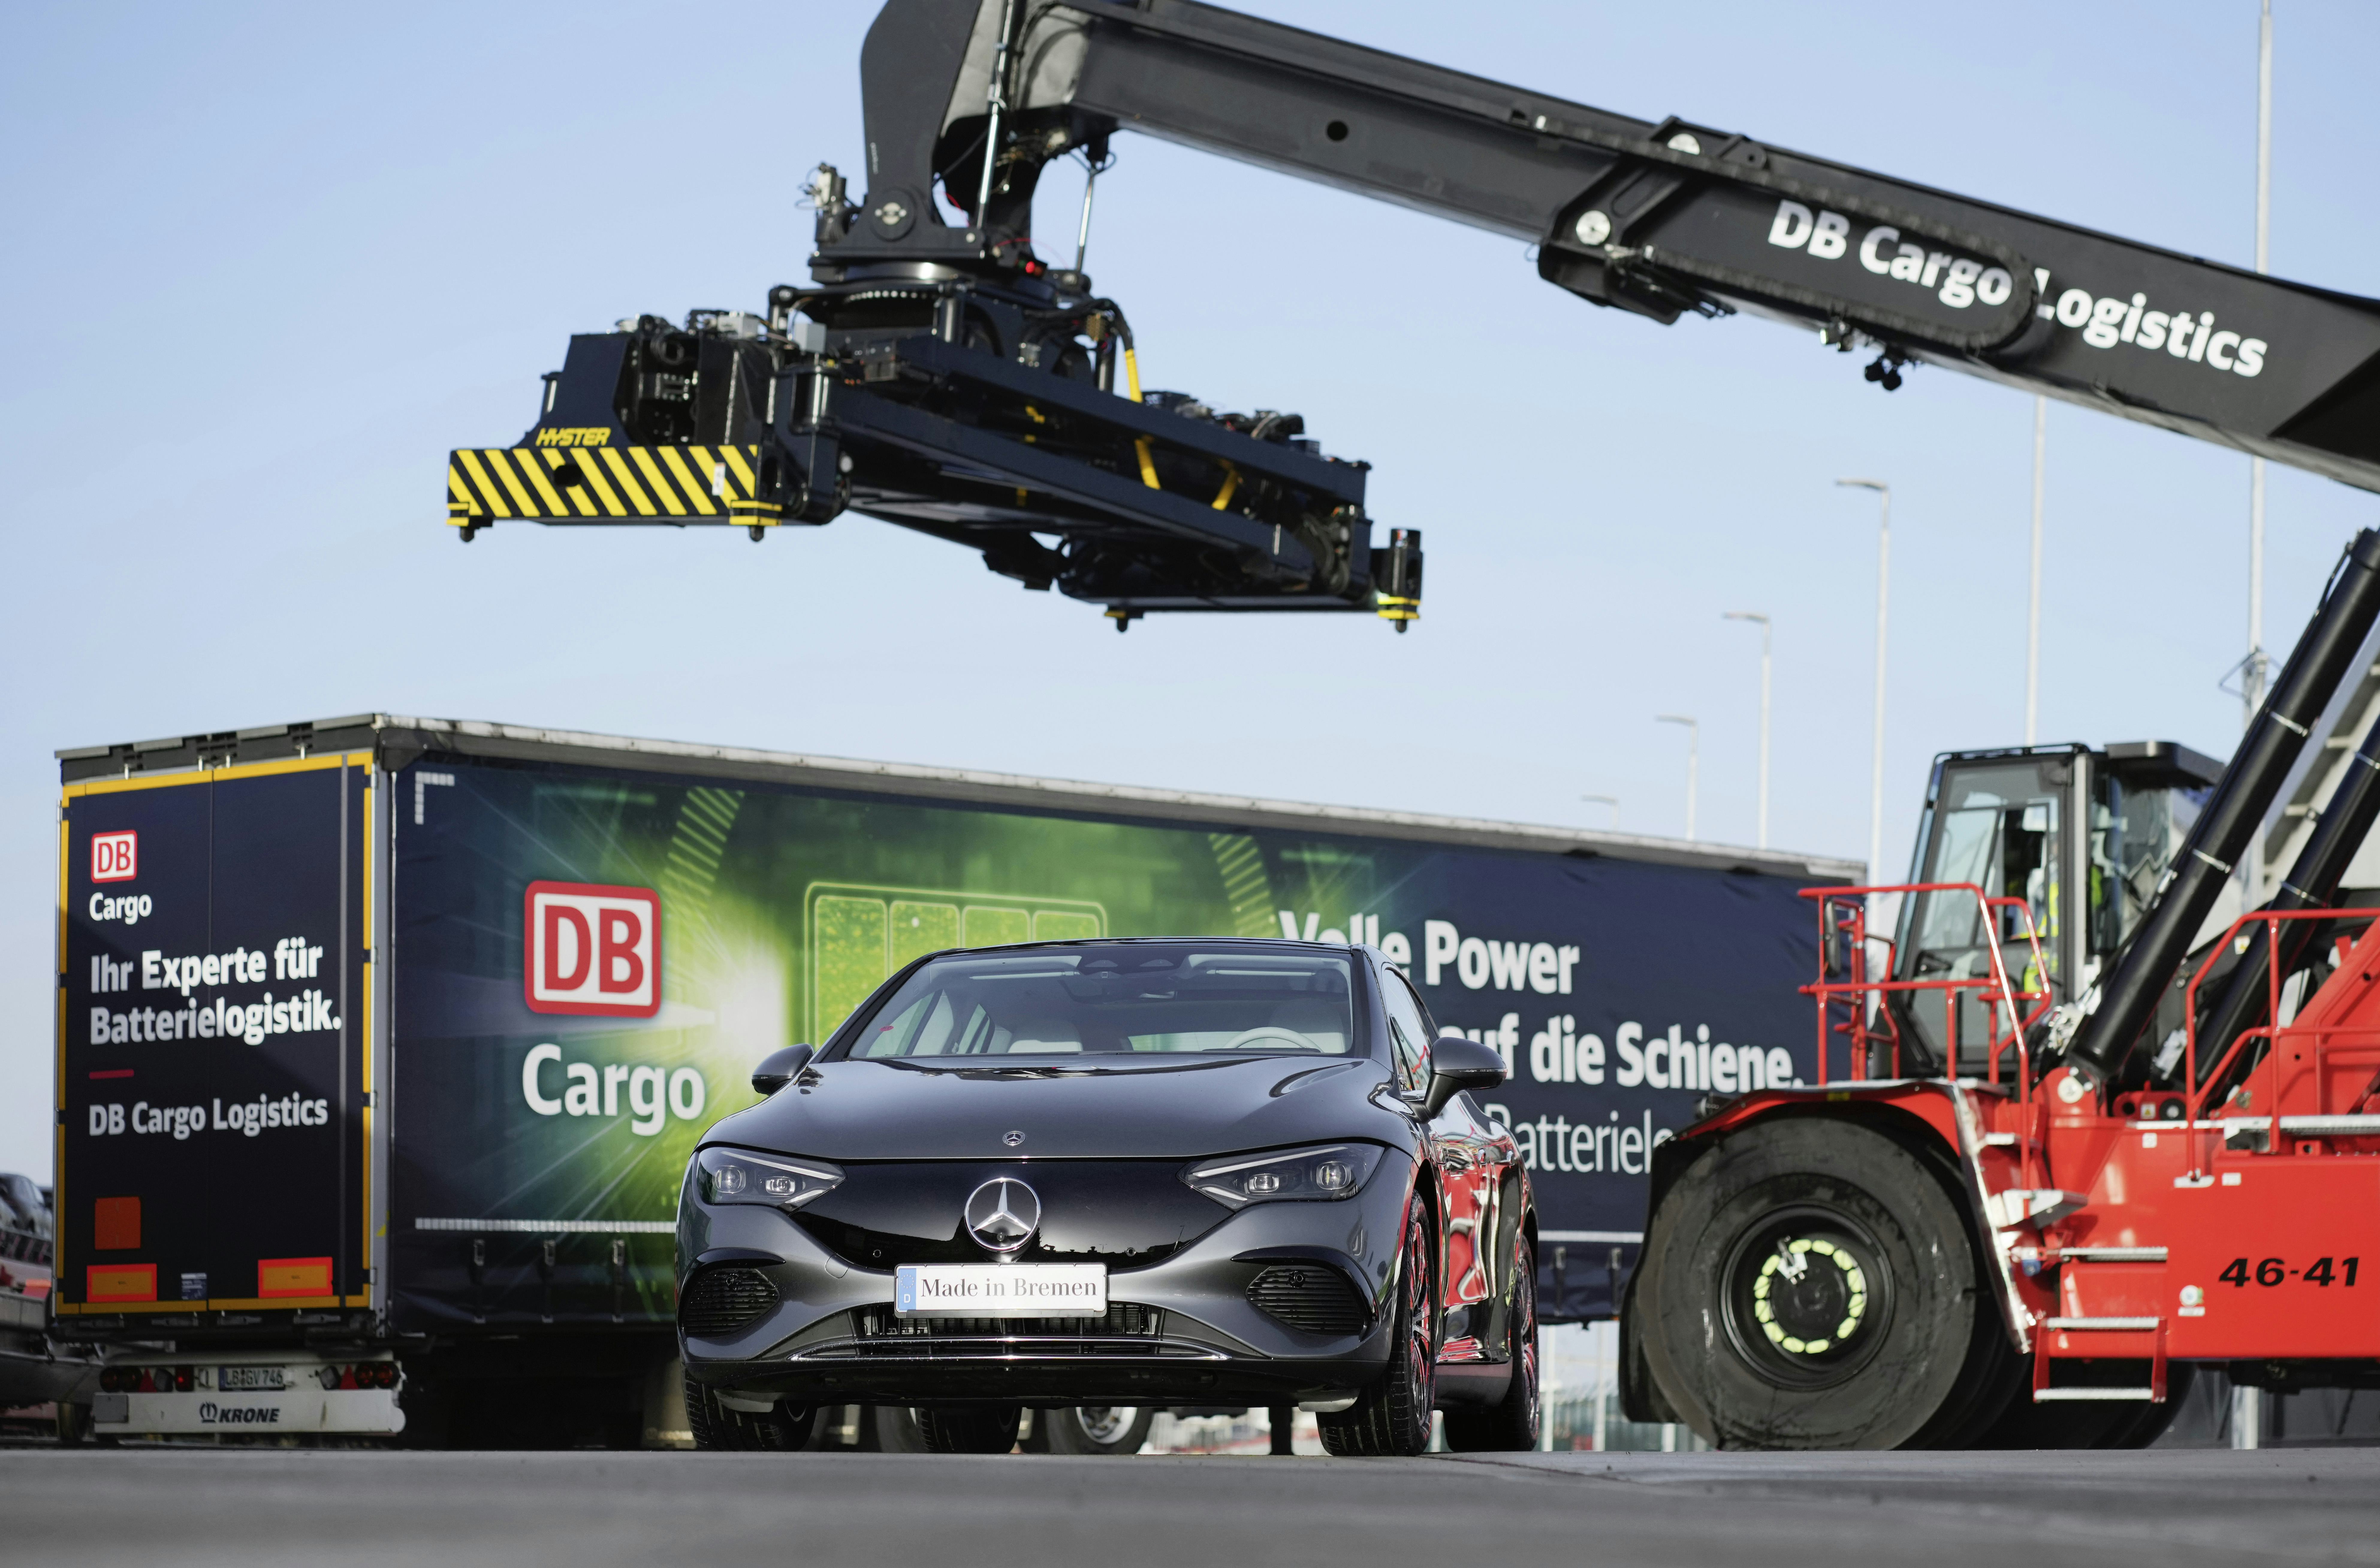 Mercedes en DB Cargo maken acculogistiek CO2-neutraal